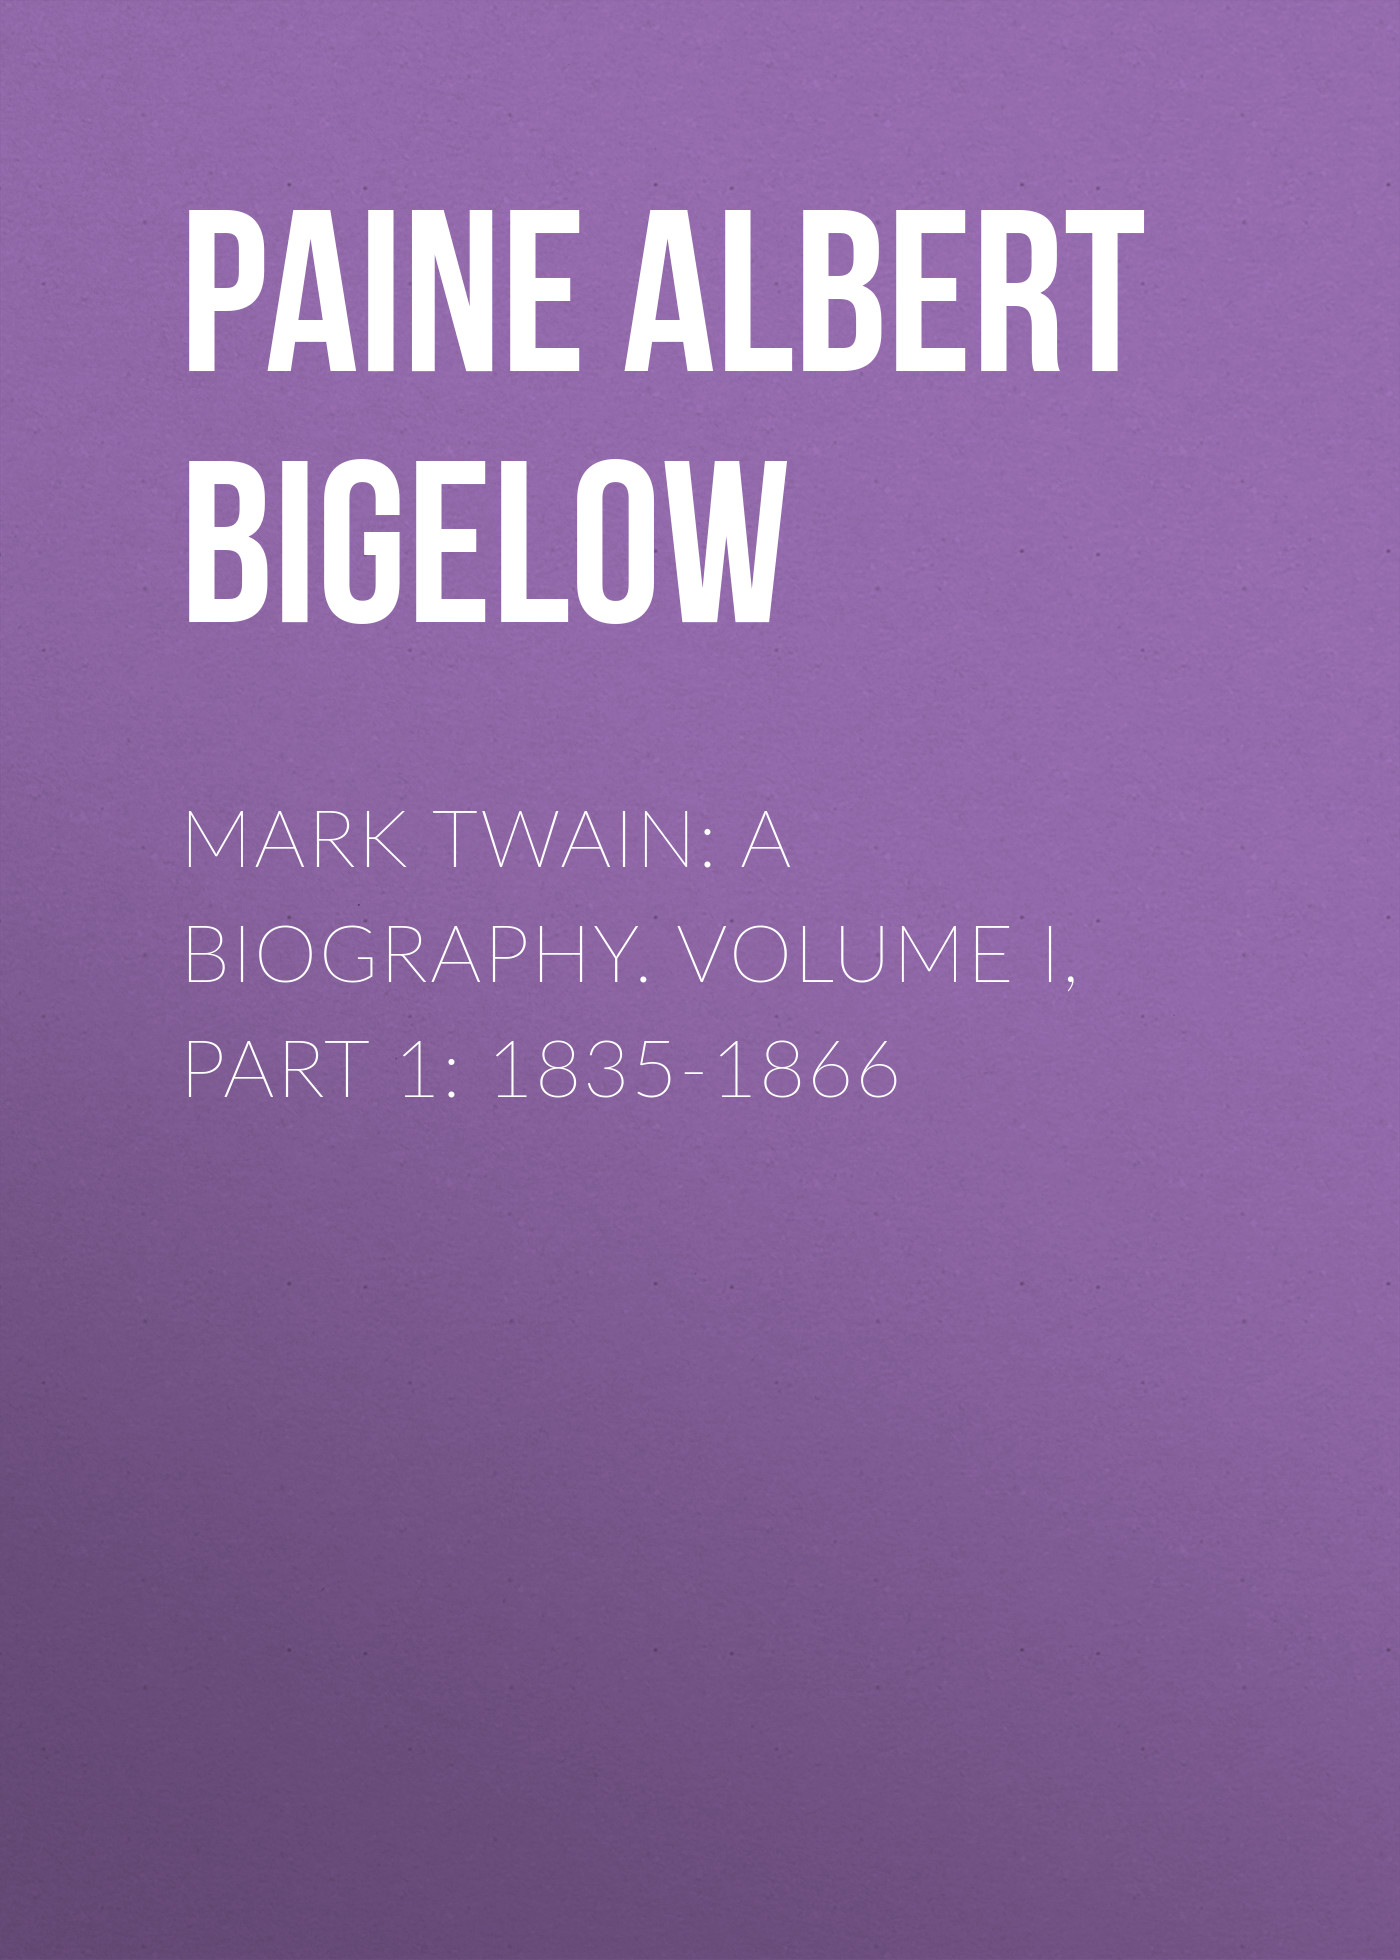 Mark Twain: A Biography. Volume I, Part 1: 1835-1866